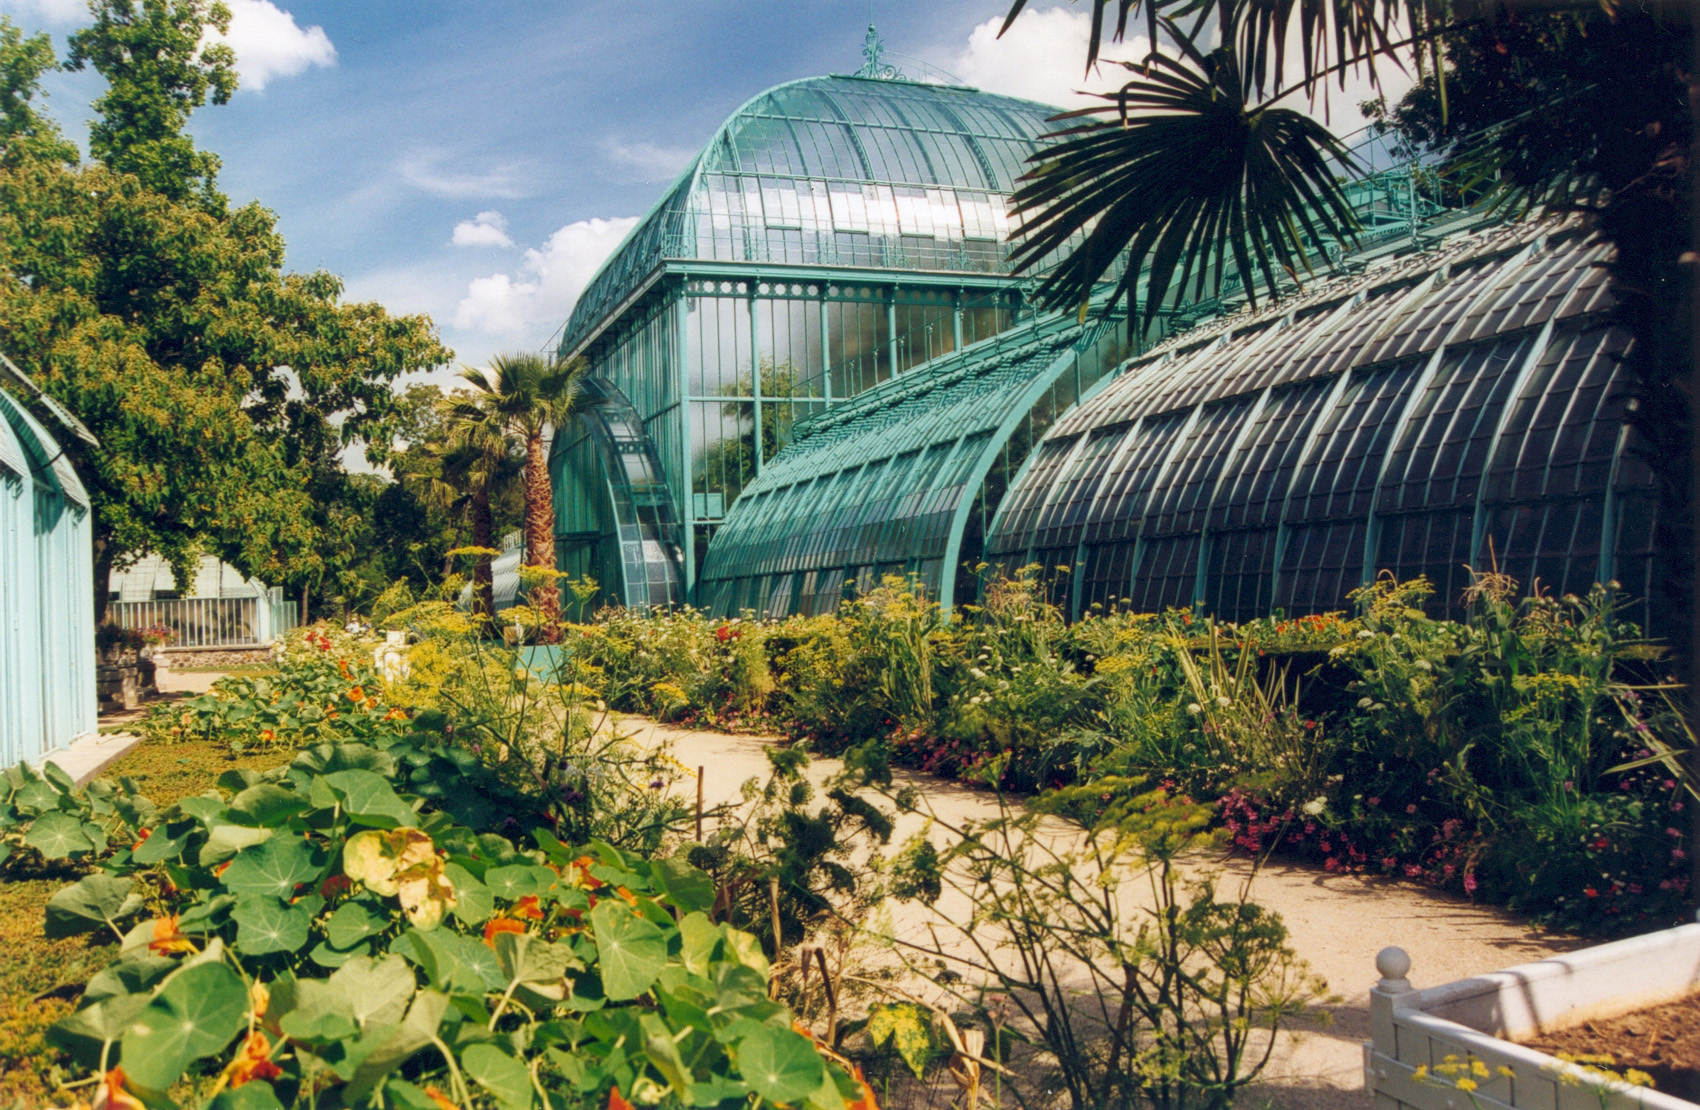 Jardin des Serres d'Auteuil - Wikipedia